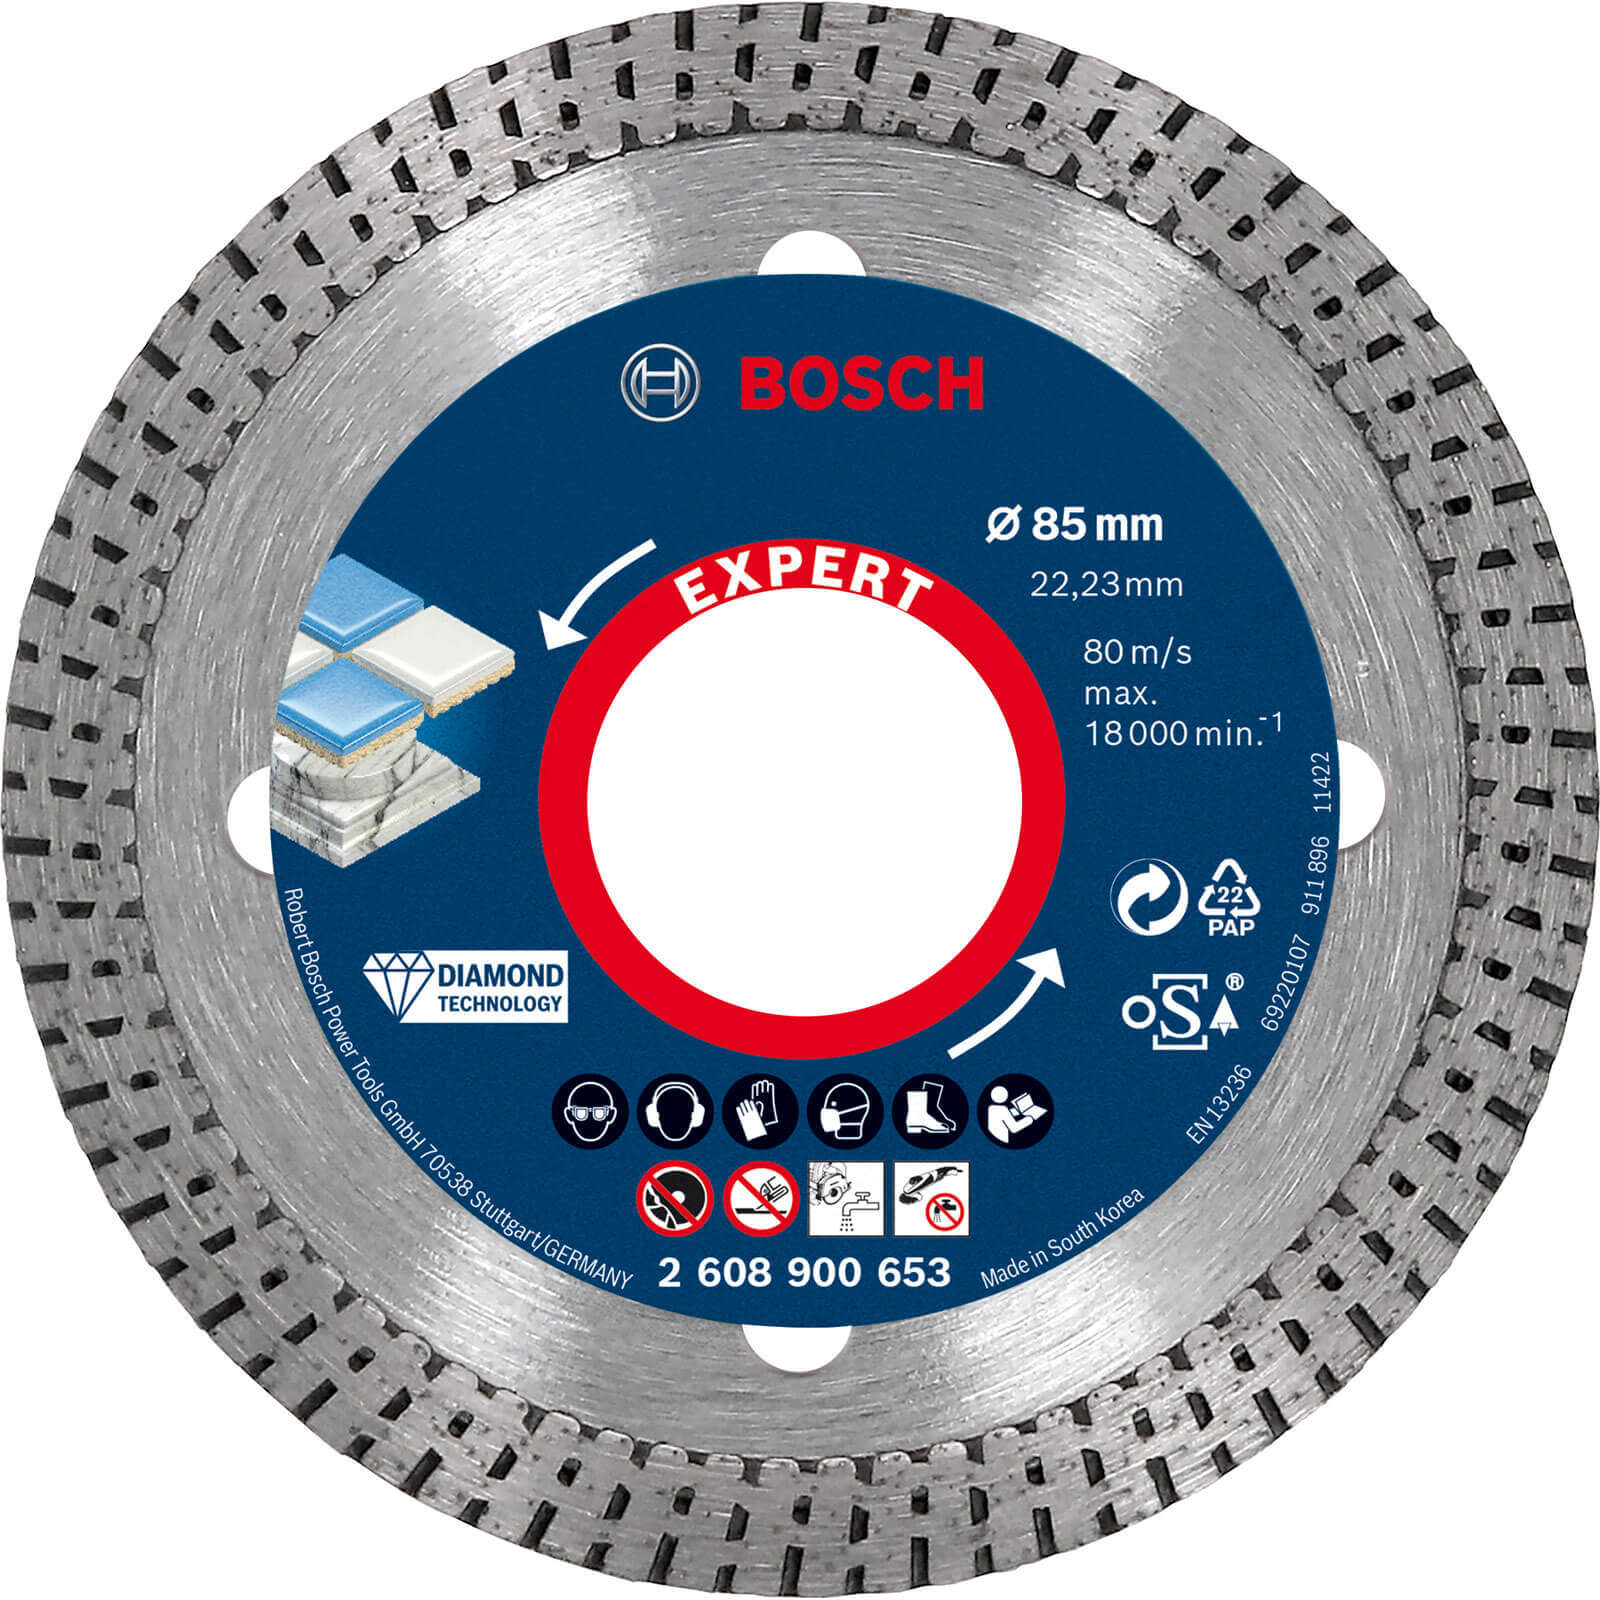 Bosch Expert Hard Ceramic Diamond Cutting Disc 85mm 1.6mm 22mm